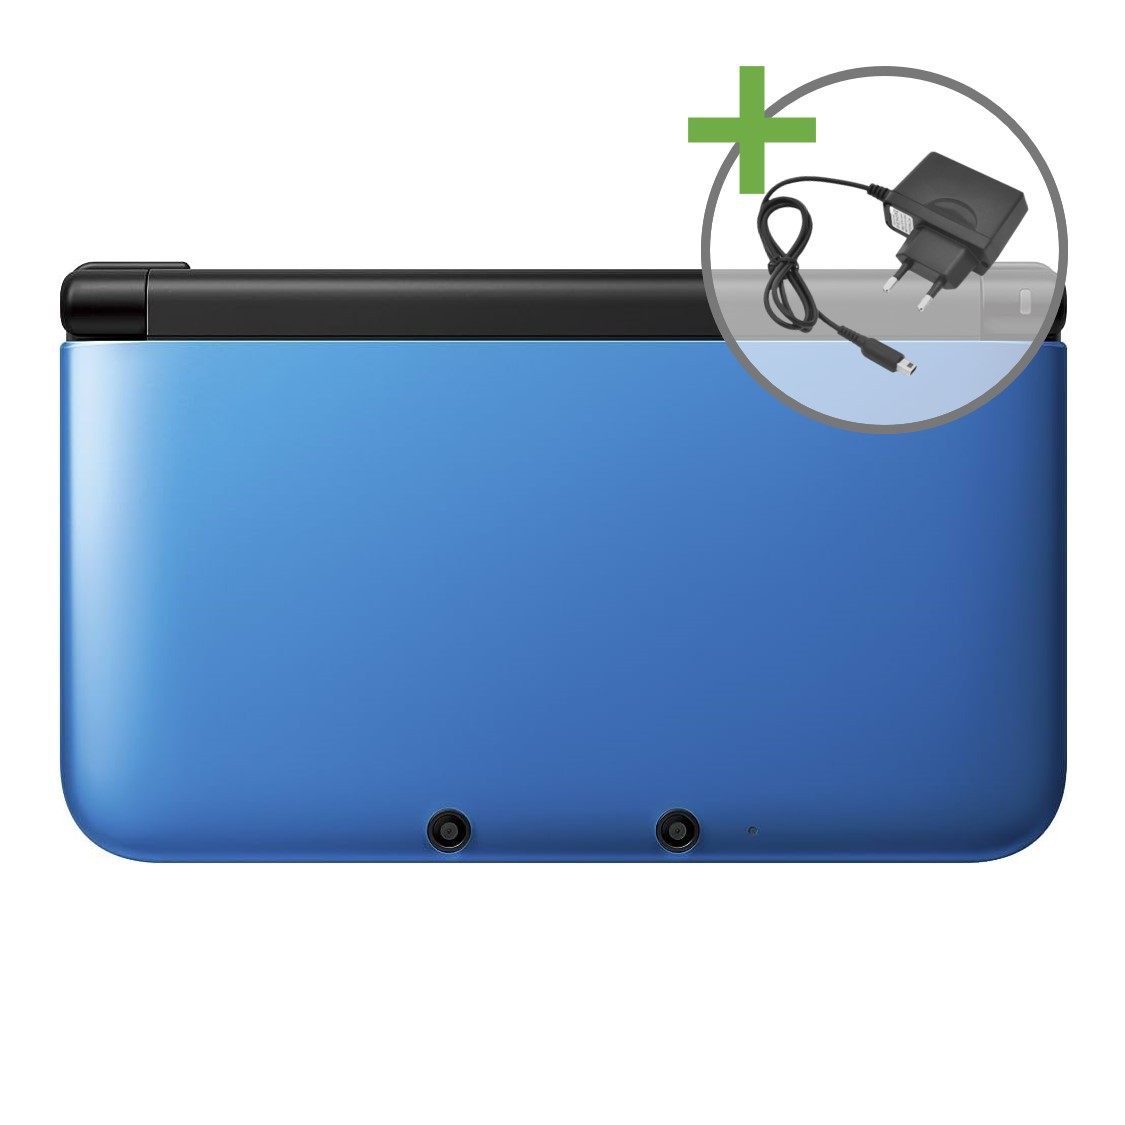 Nintendo 3DS XL - Blue/Black - Nintendo 3DS Hardware - 3